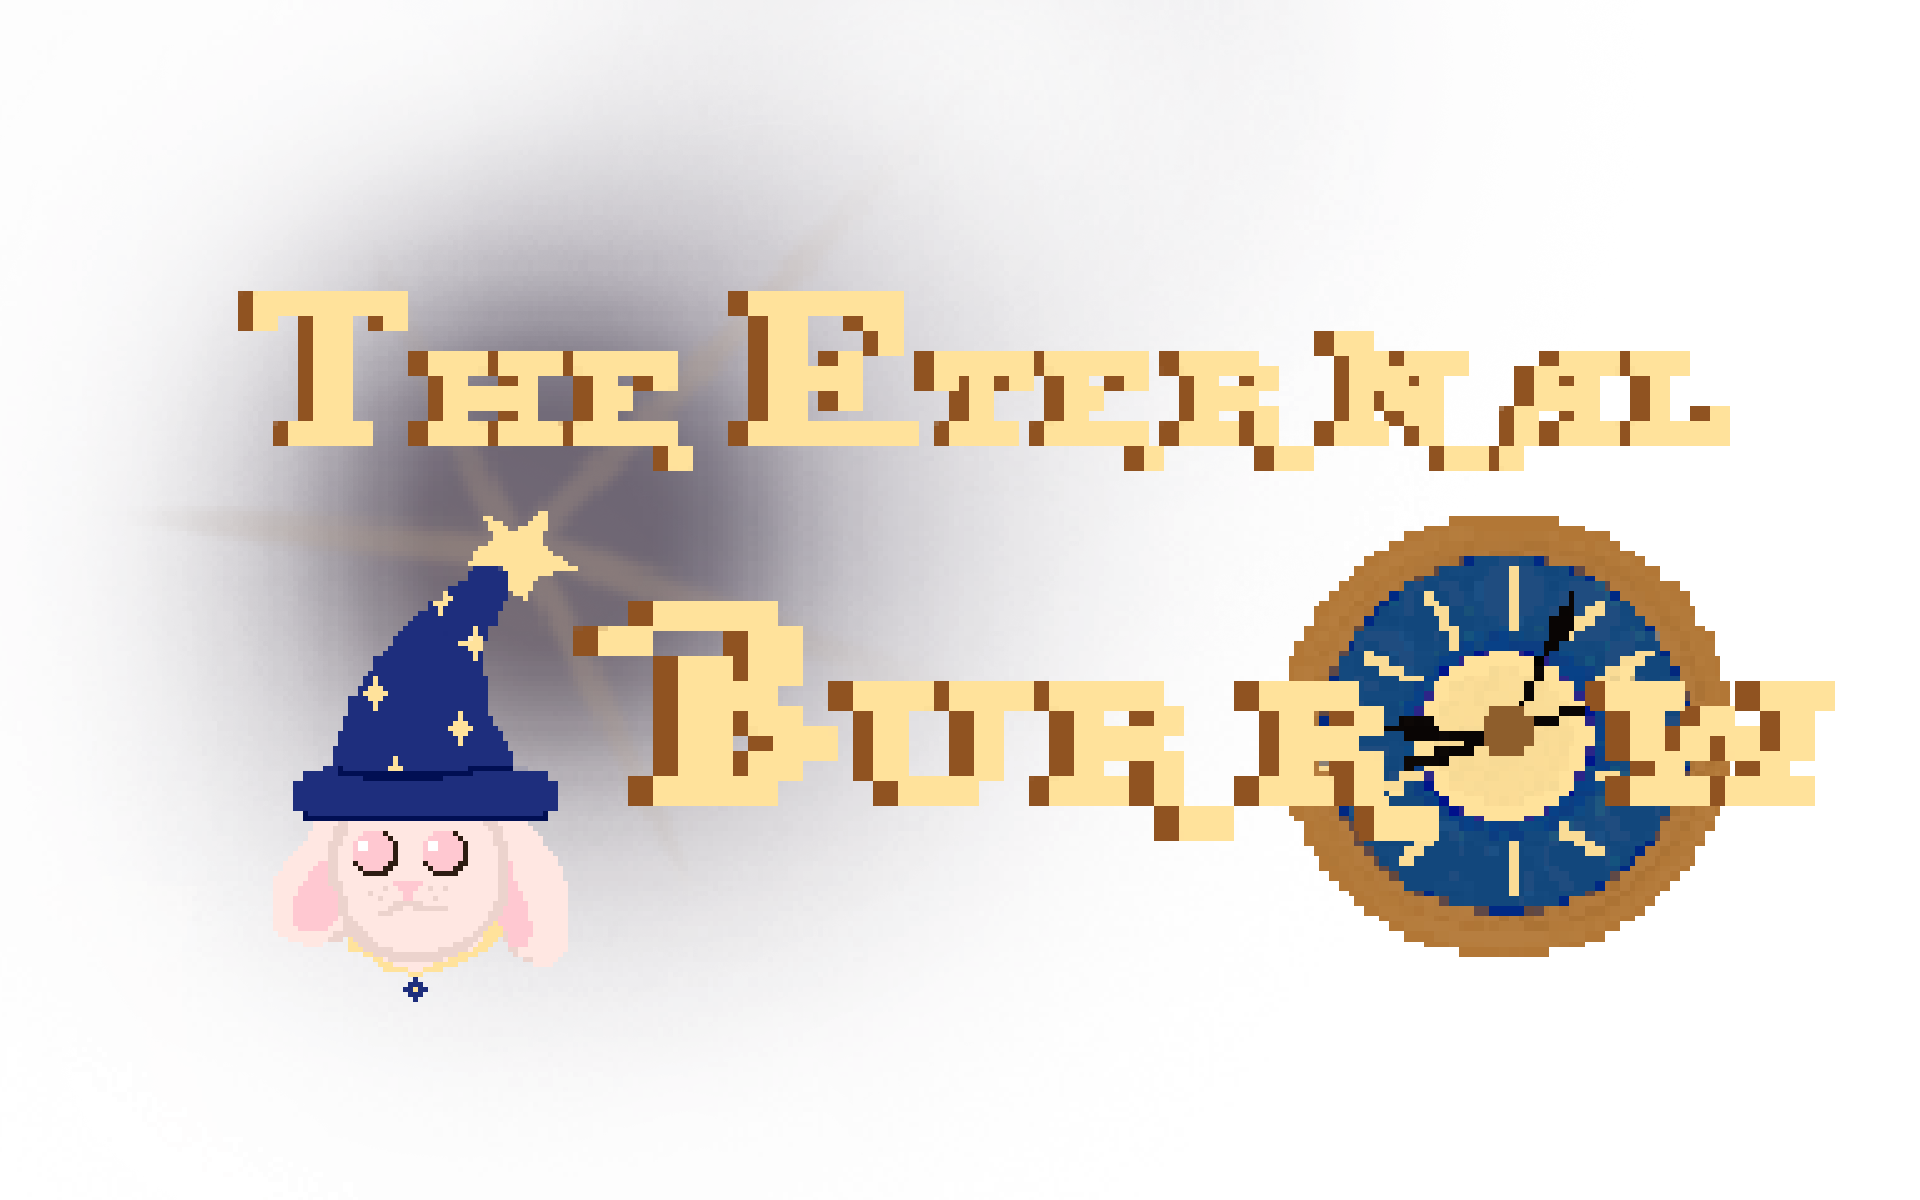 The Eternal Burrow